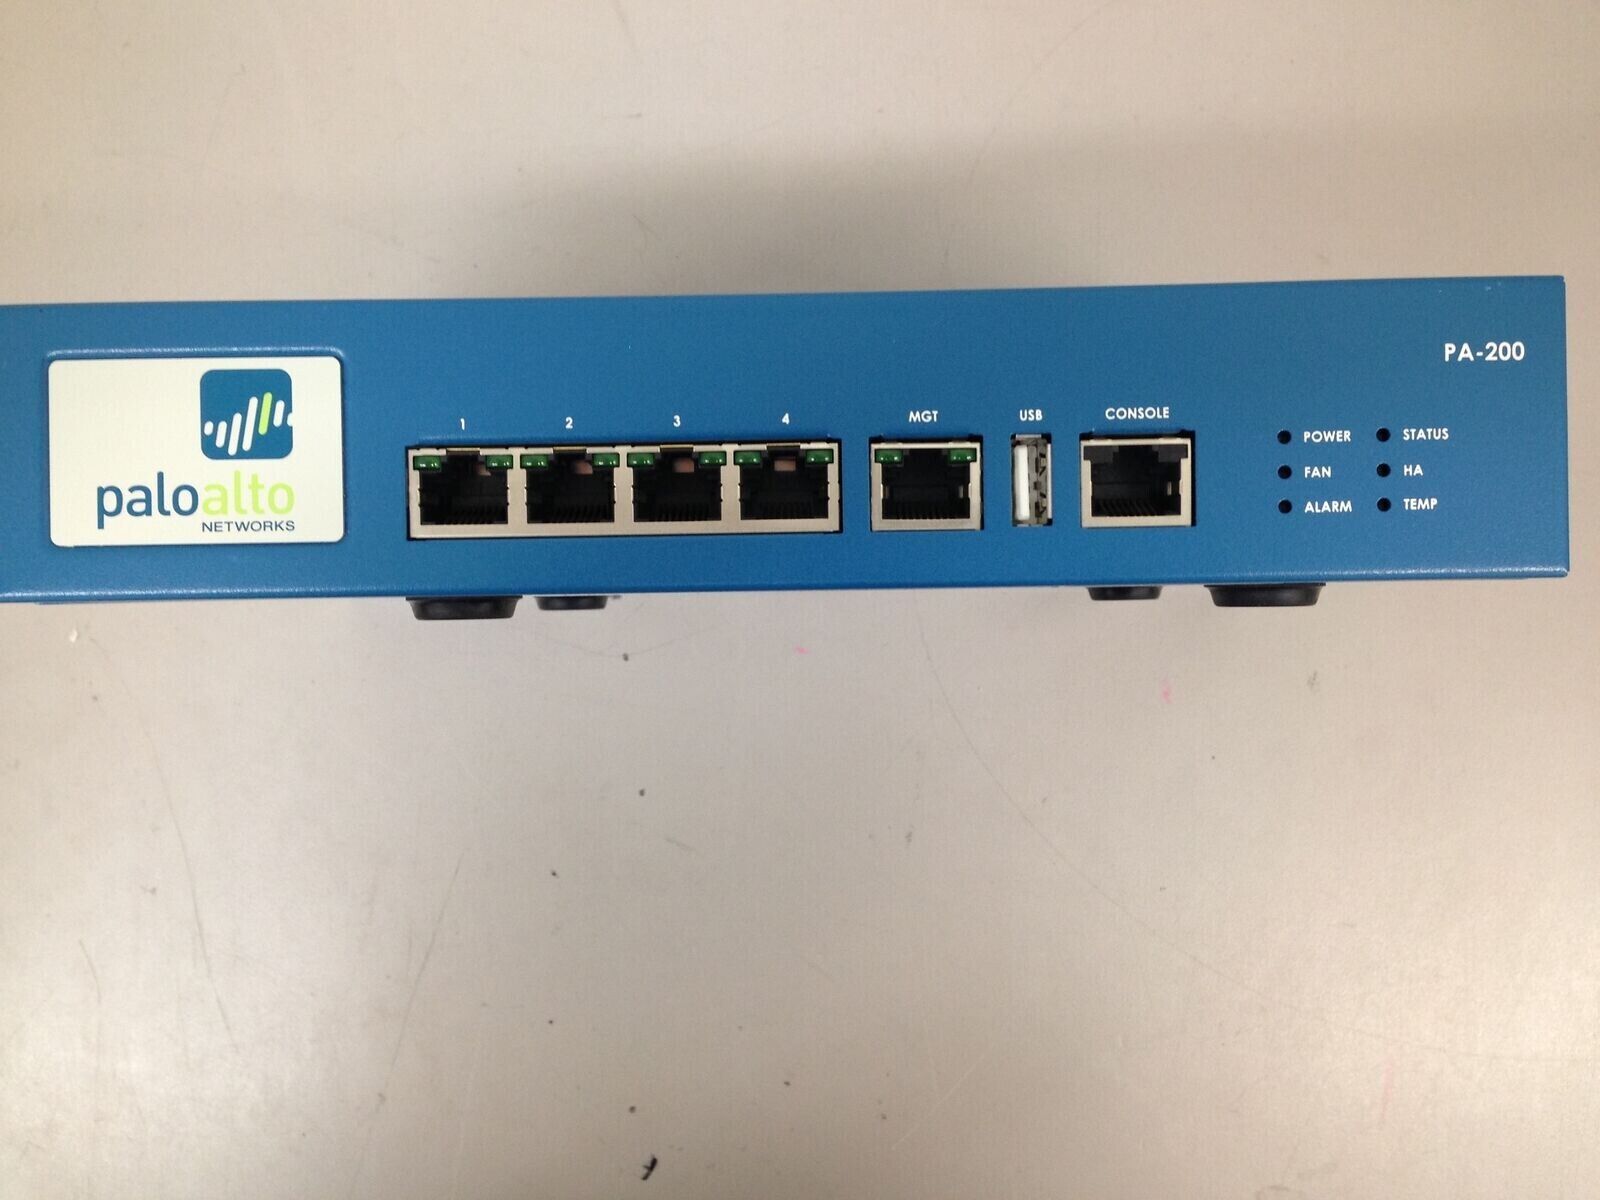 Palo Alto Networks PA-200 Firewall Security Appliance